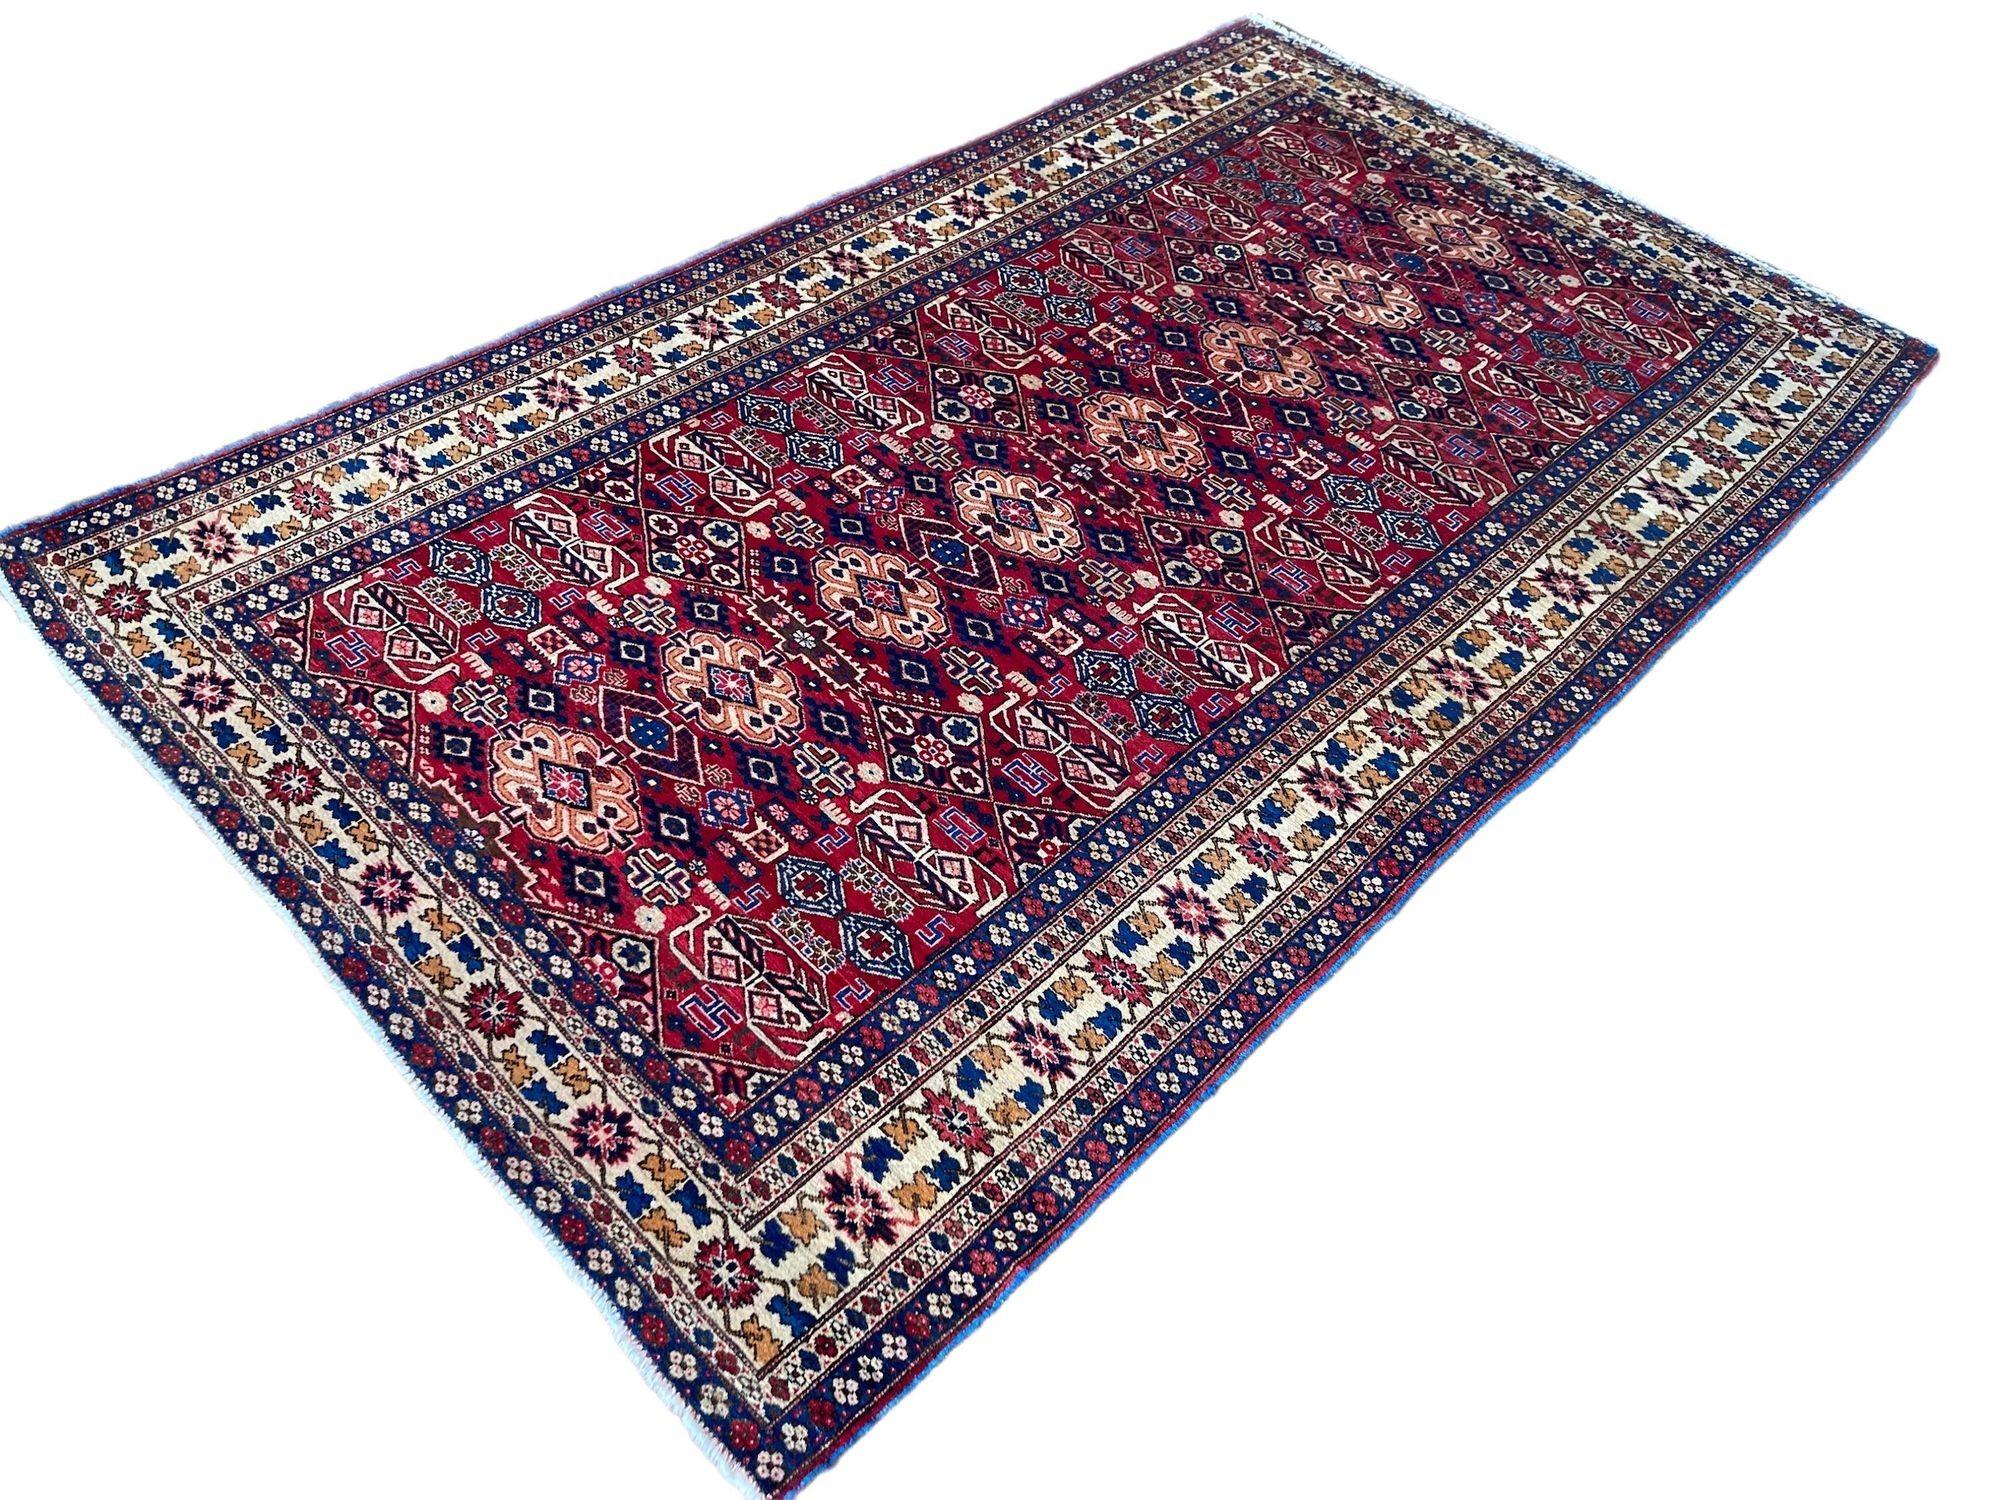 Antique Caucasian Shirvan Carpet 2.67m X 1.60m In Good Condition For Sale In St. Albans, GB